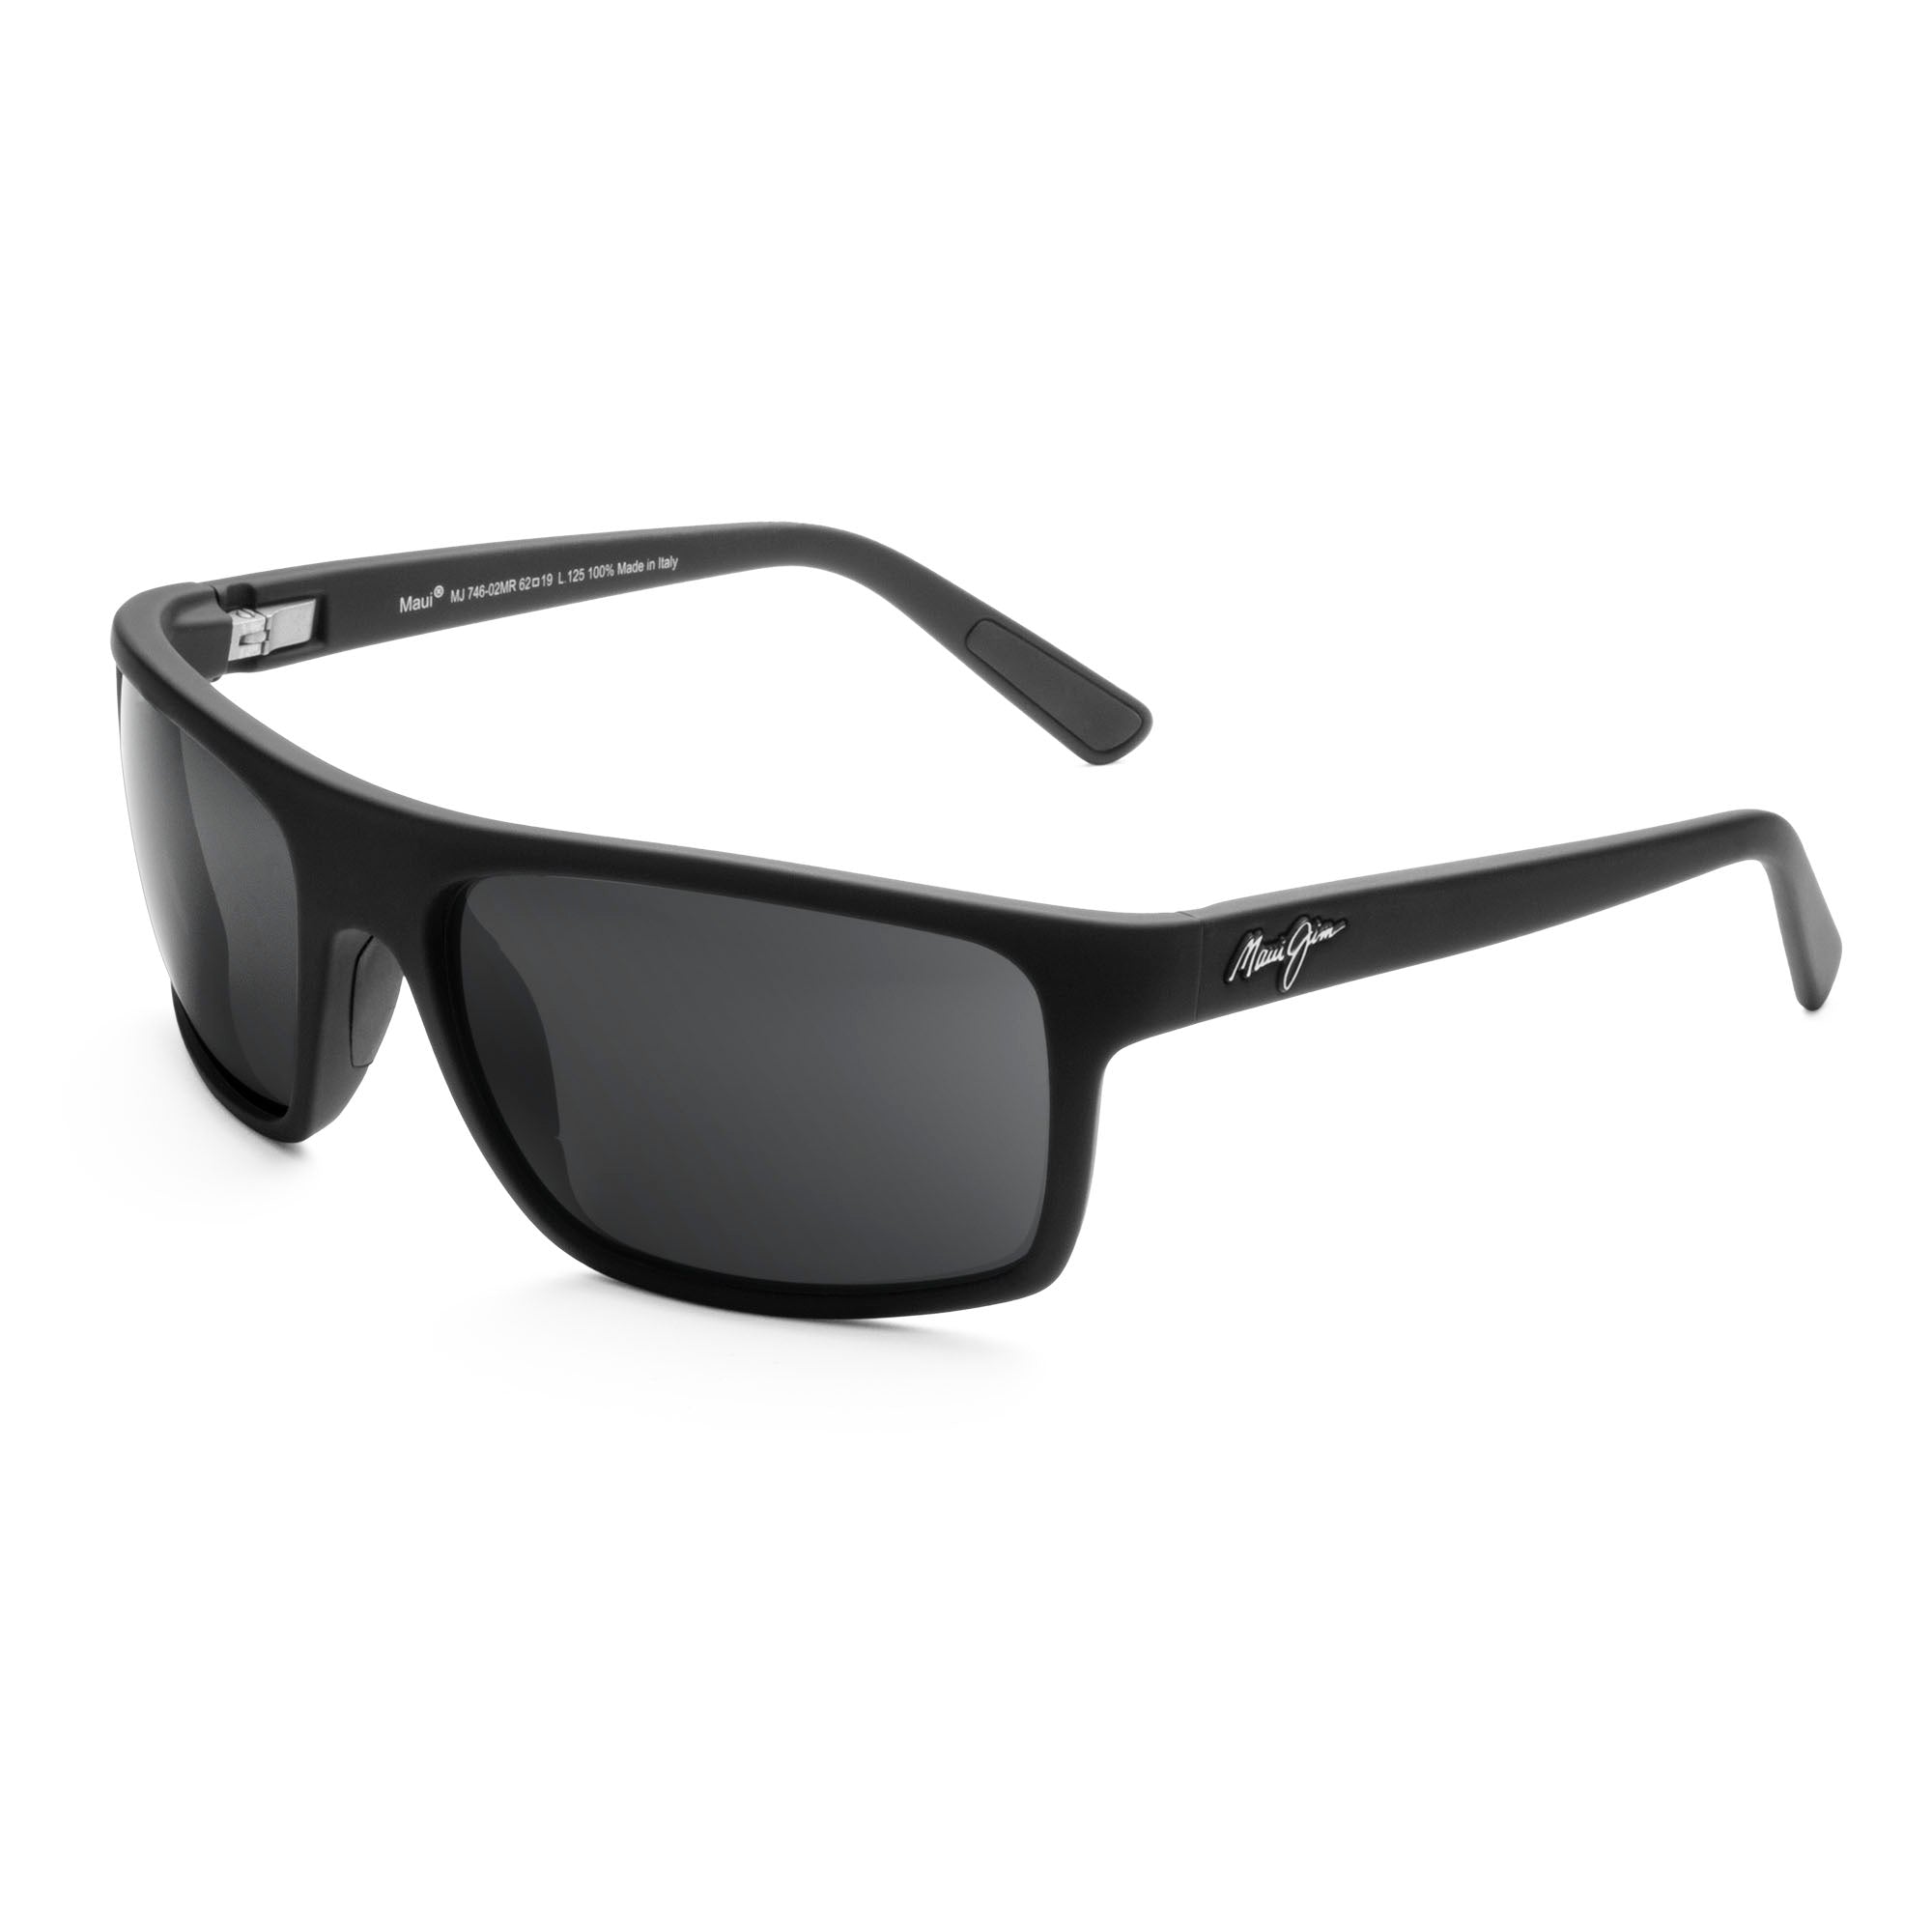 Maui Jim H40810 Byron Bay Wrap Sunglasses - Brown for sale online | eBay